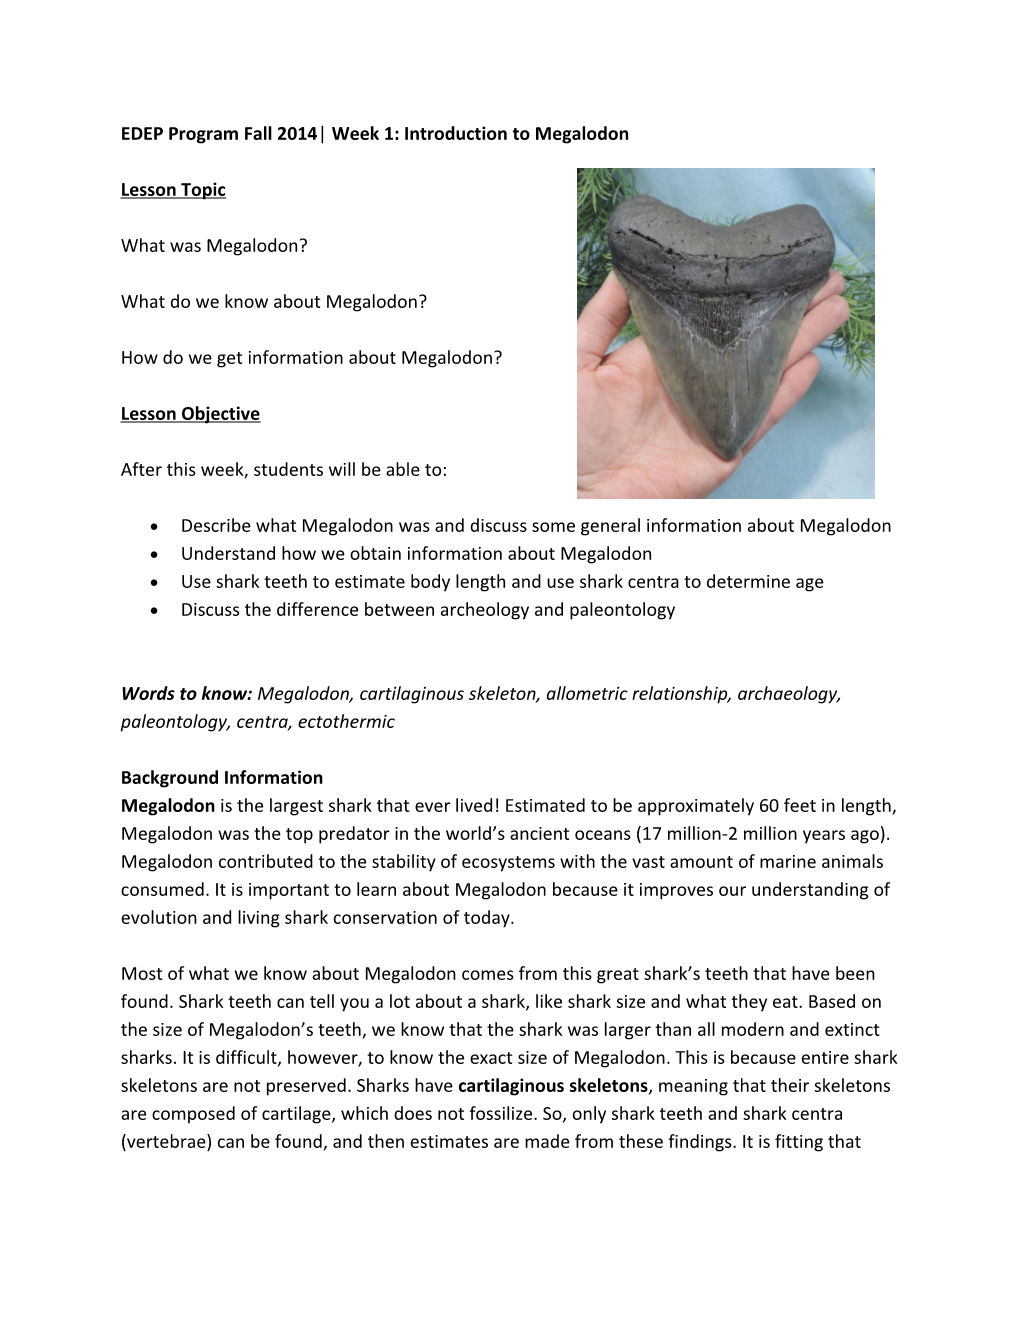 EDEP Program Fall 2014 Week 1: Introduction to Megalodon